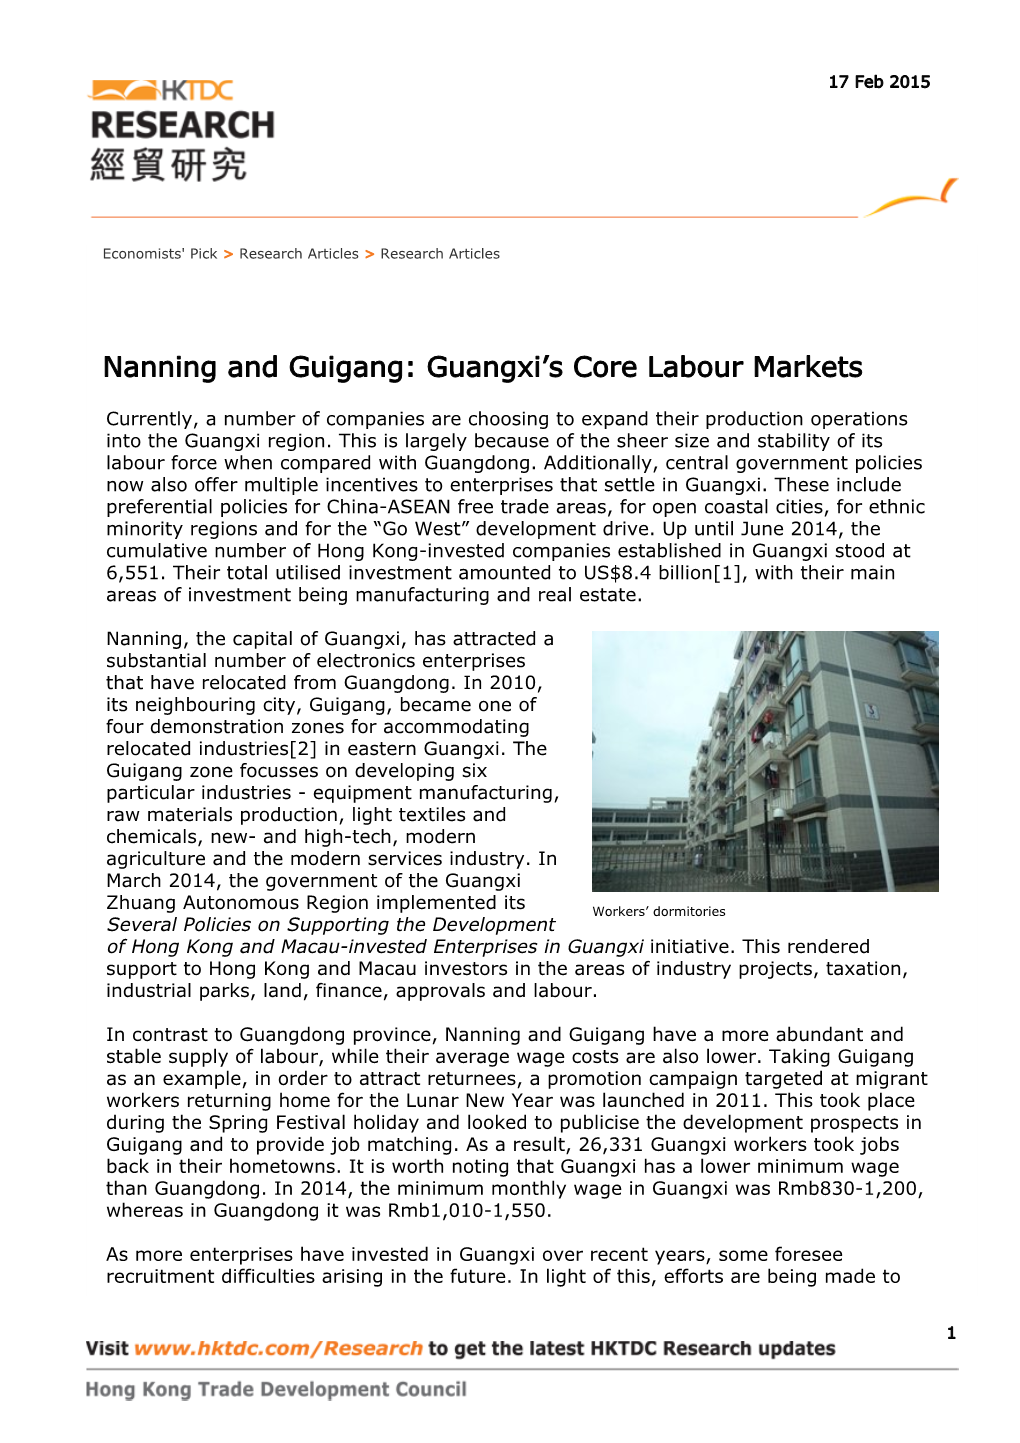 Nanning and Guigang: Guangxi's Core Labour